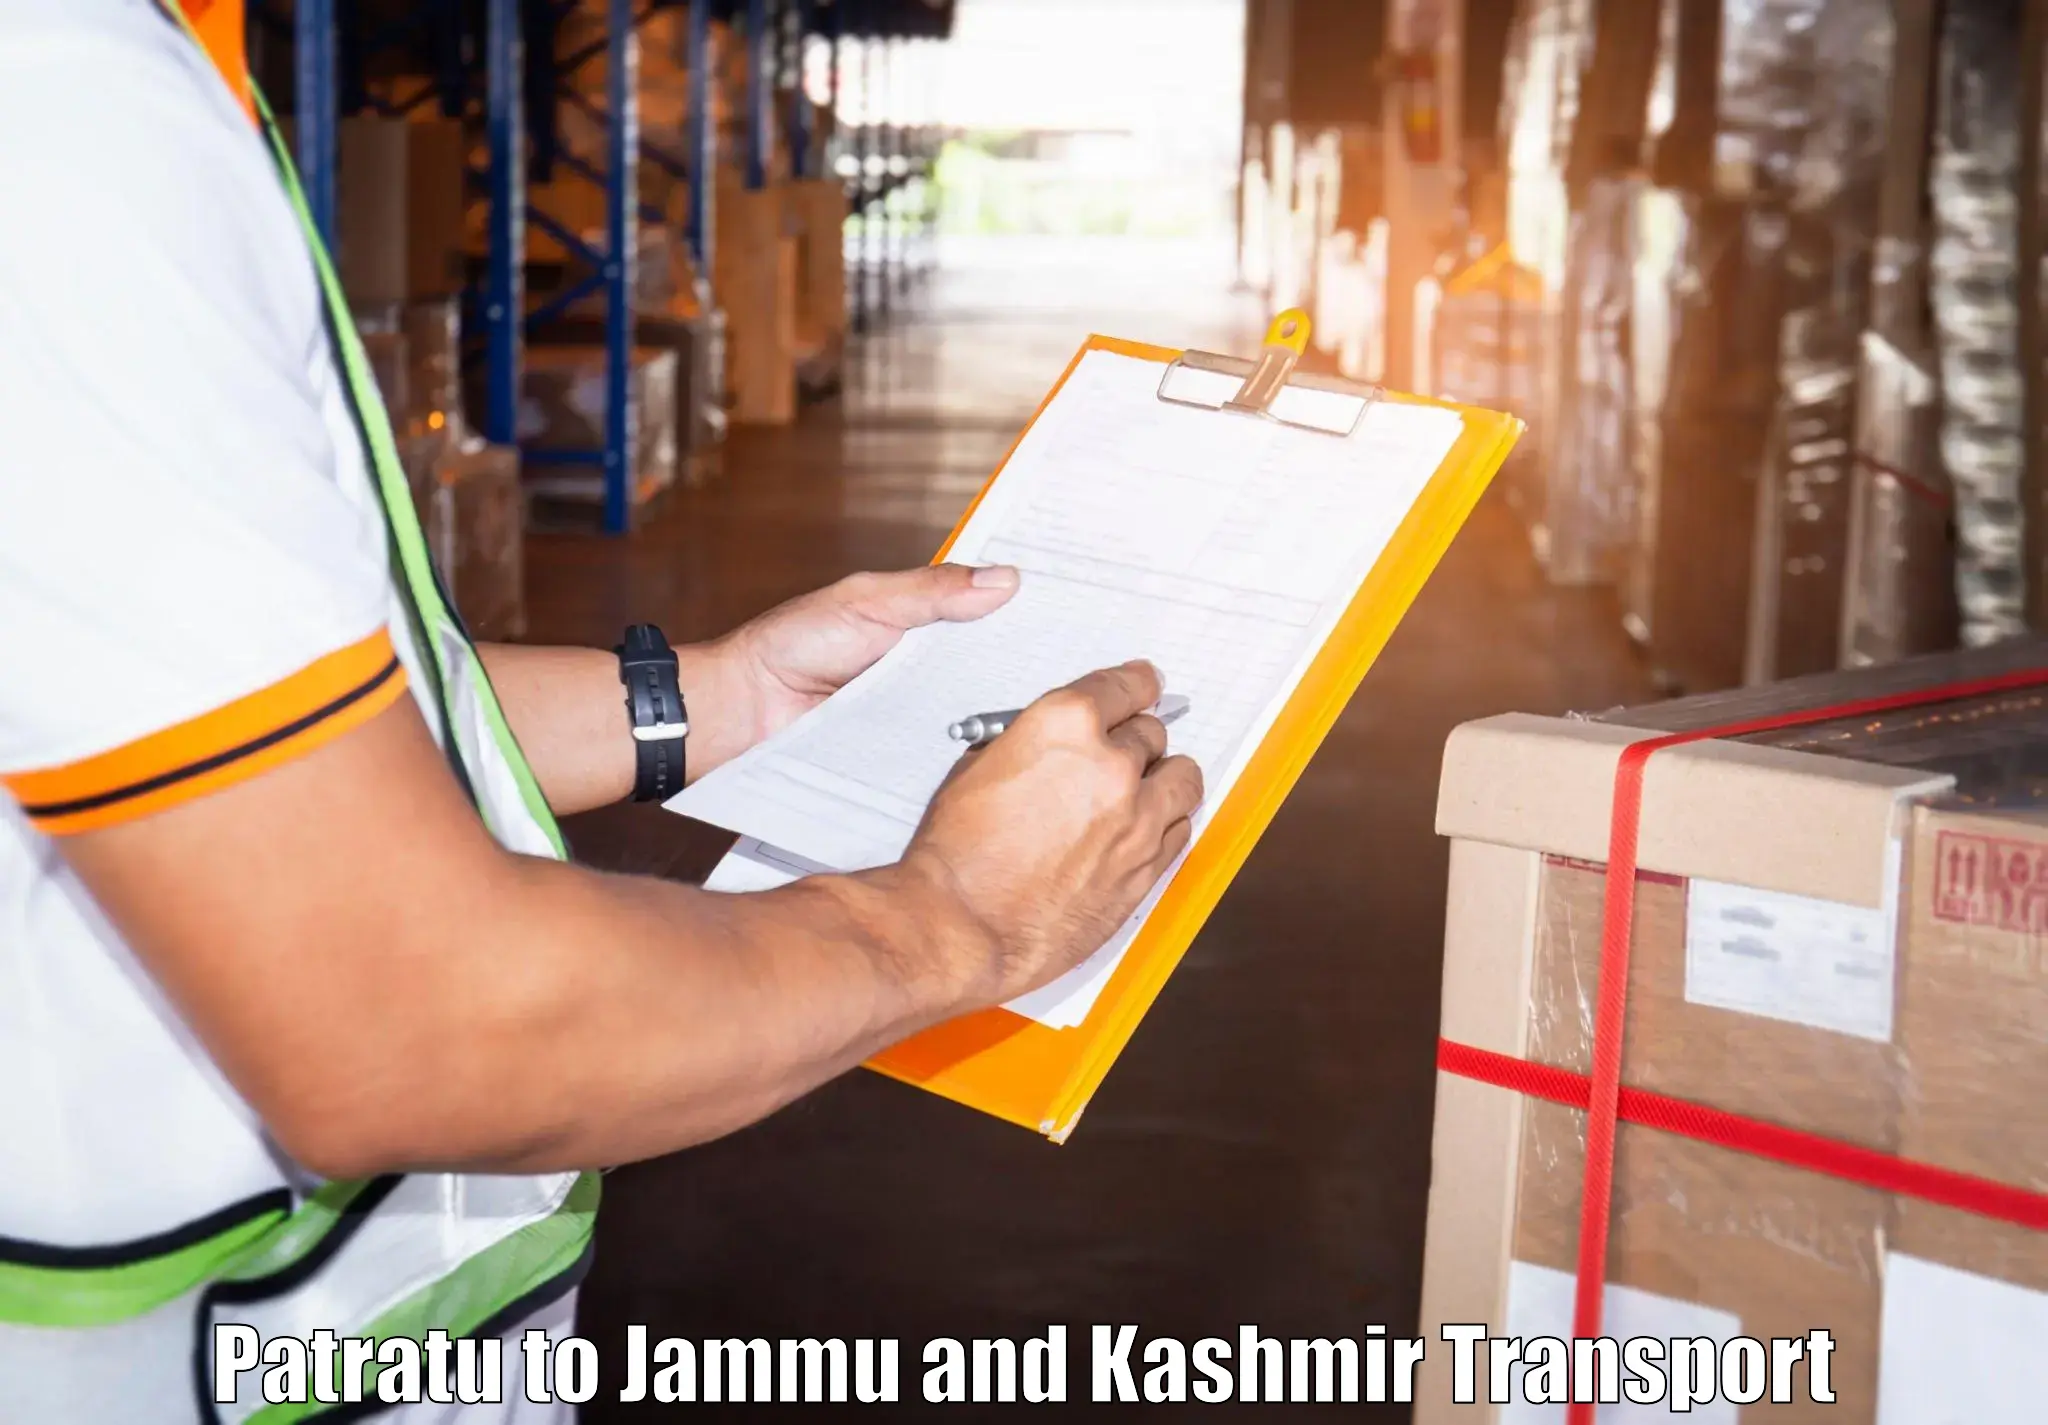 Daily transport service Patratu to Jammu and Kashmir